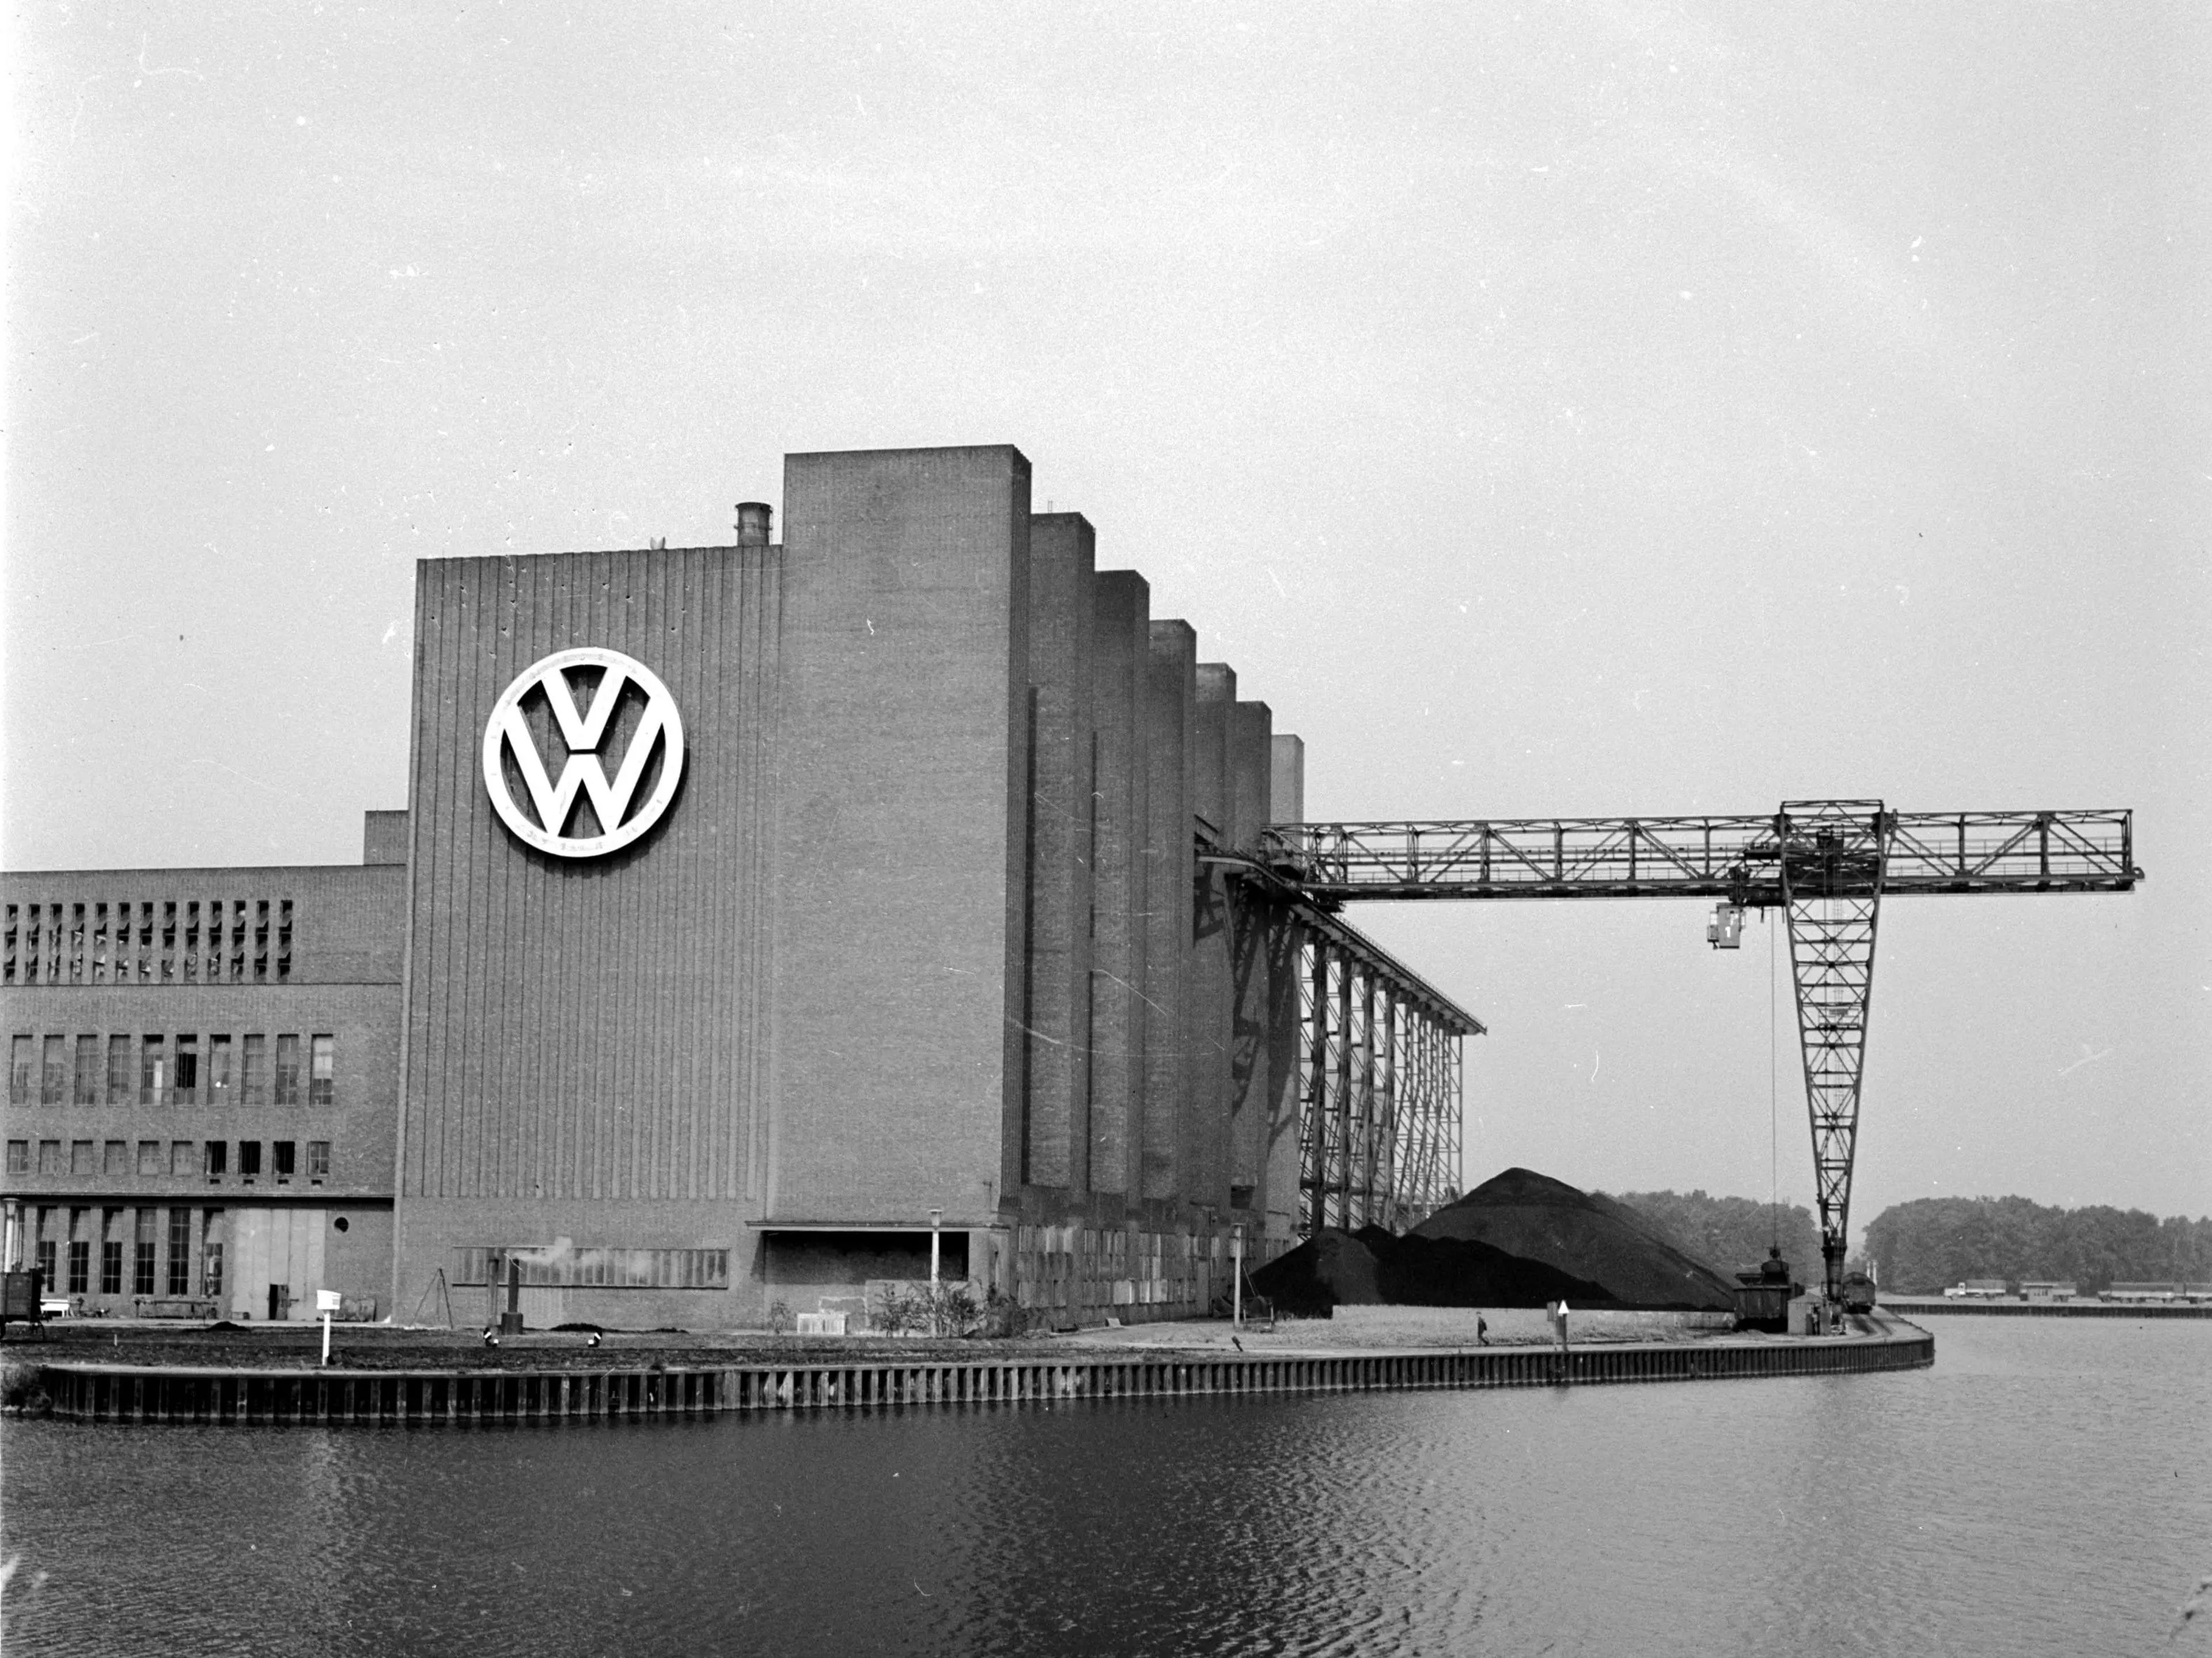 The Volkswagen factory in Wolfsburg, Germany circa 1945.